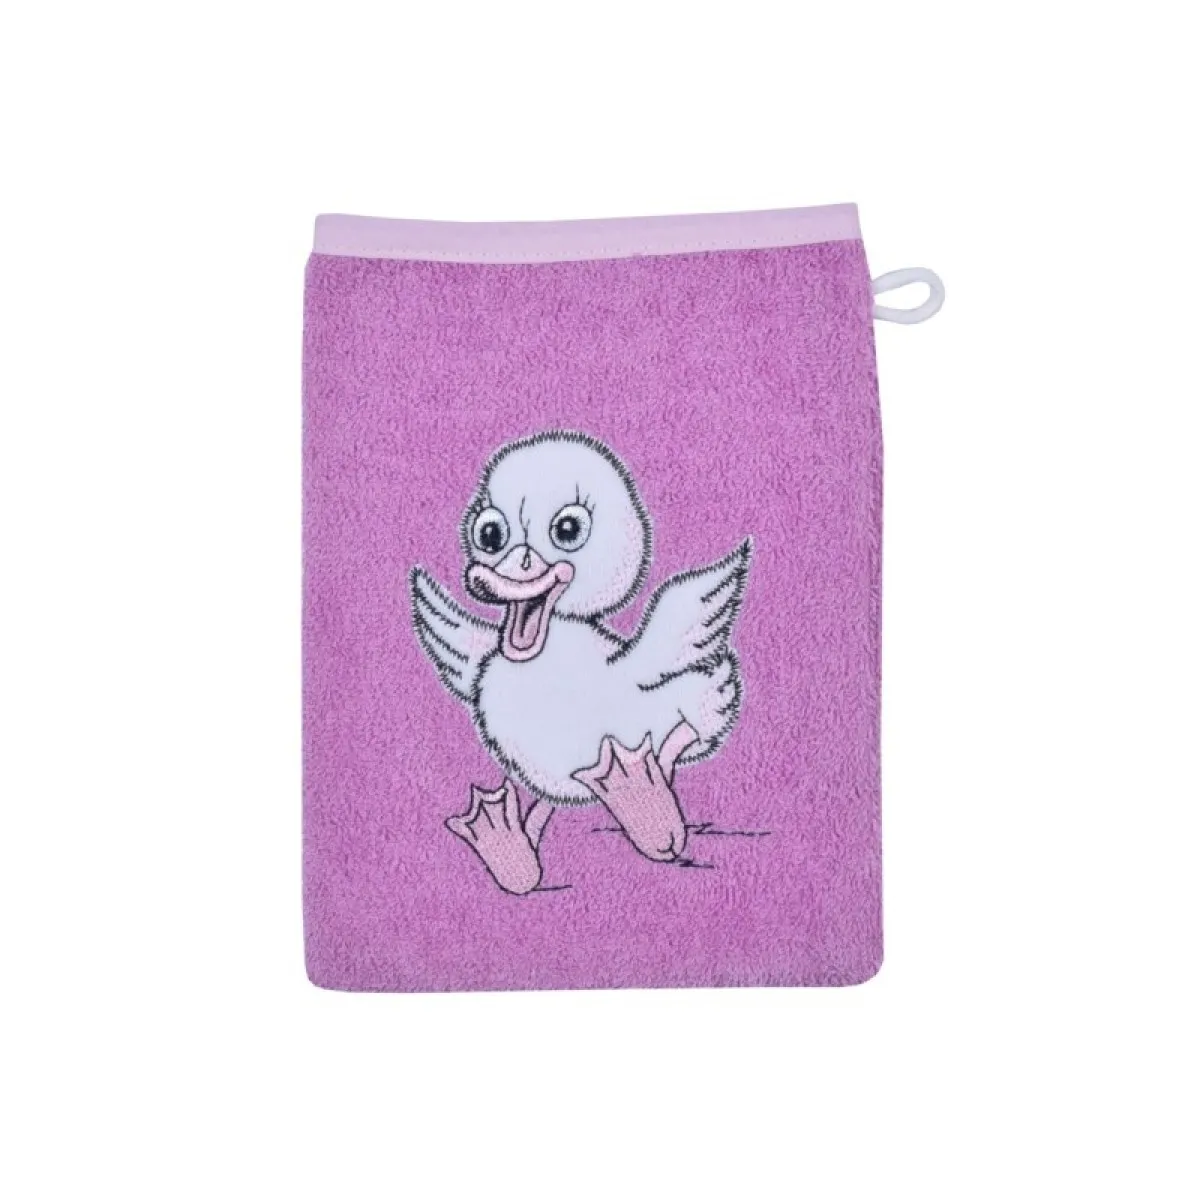 gant de toilette du tissu éponge avec motif ours Fashion Queen - Kopie - Kopie - Kopie - Kopie